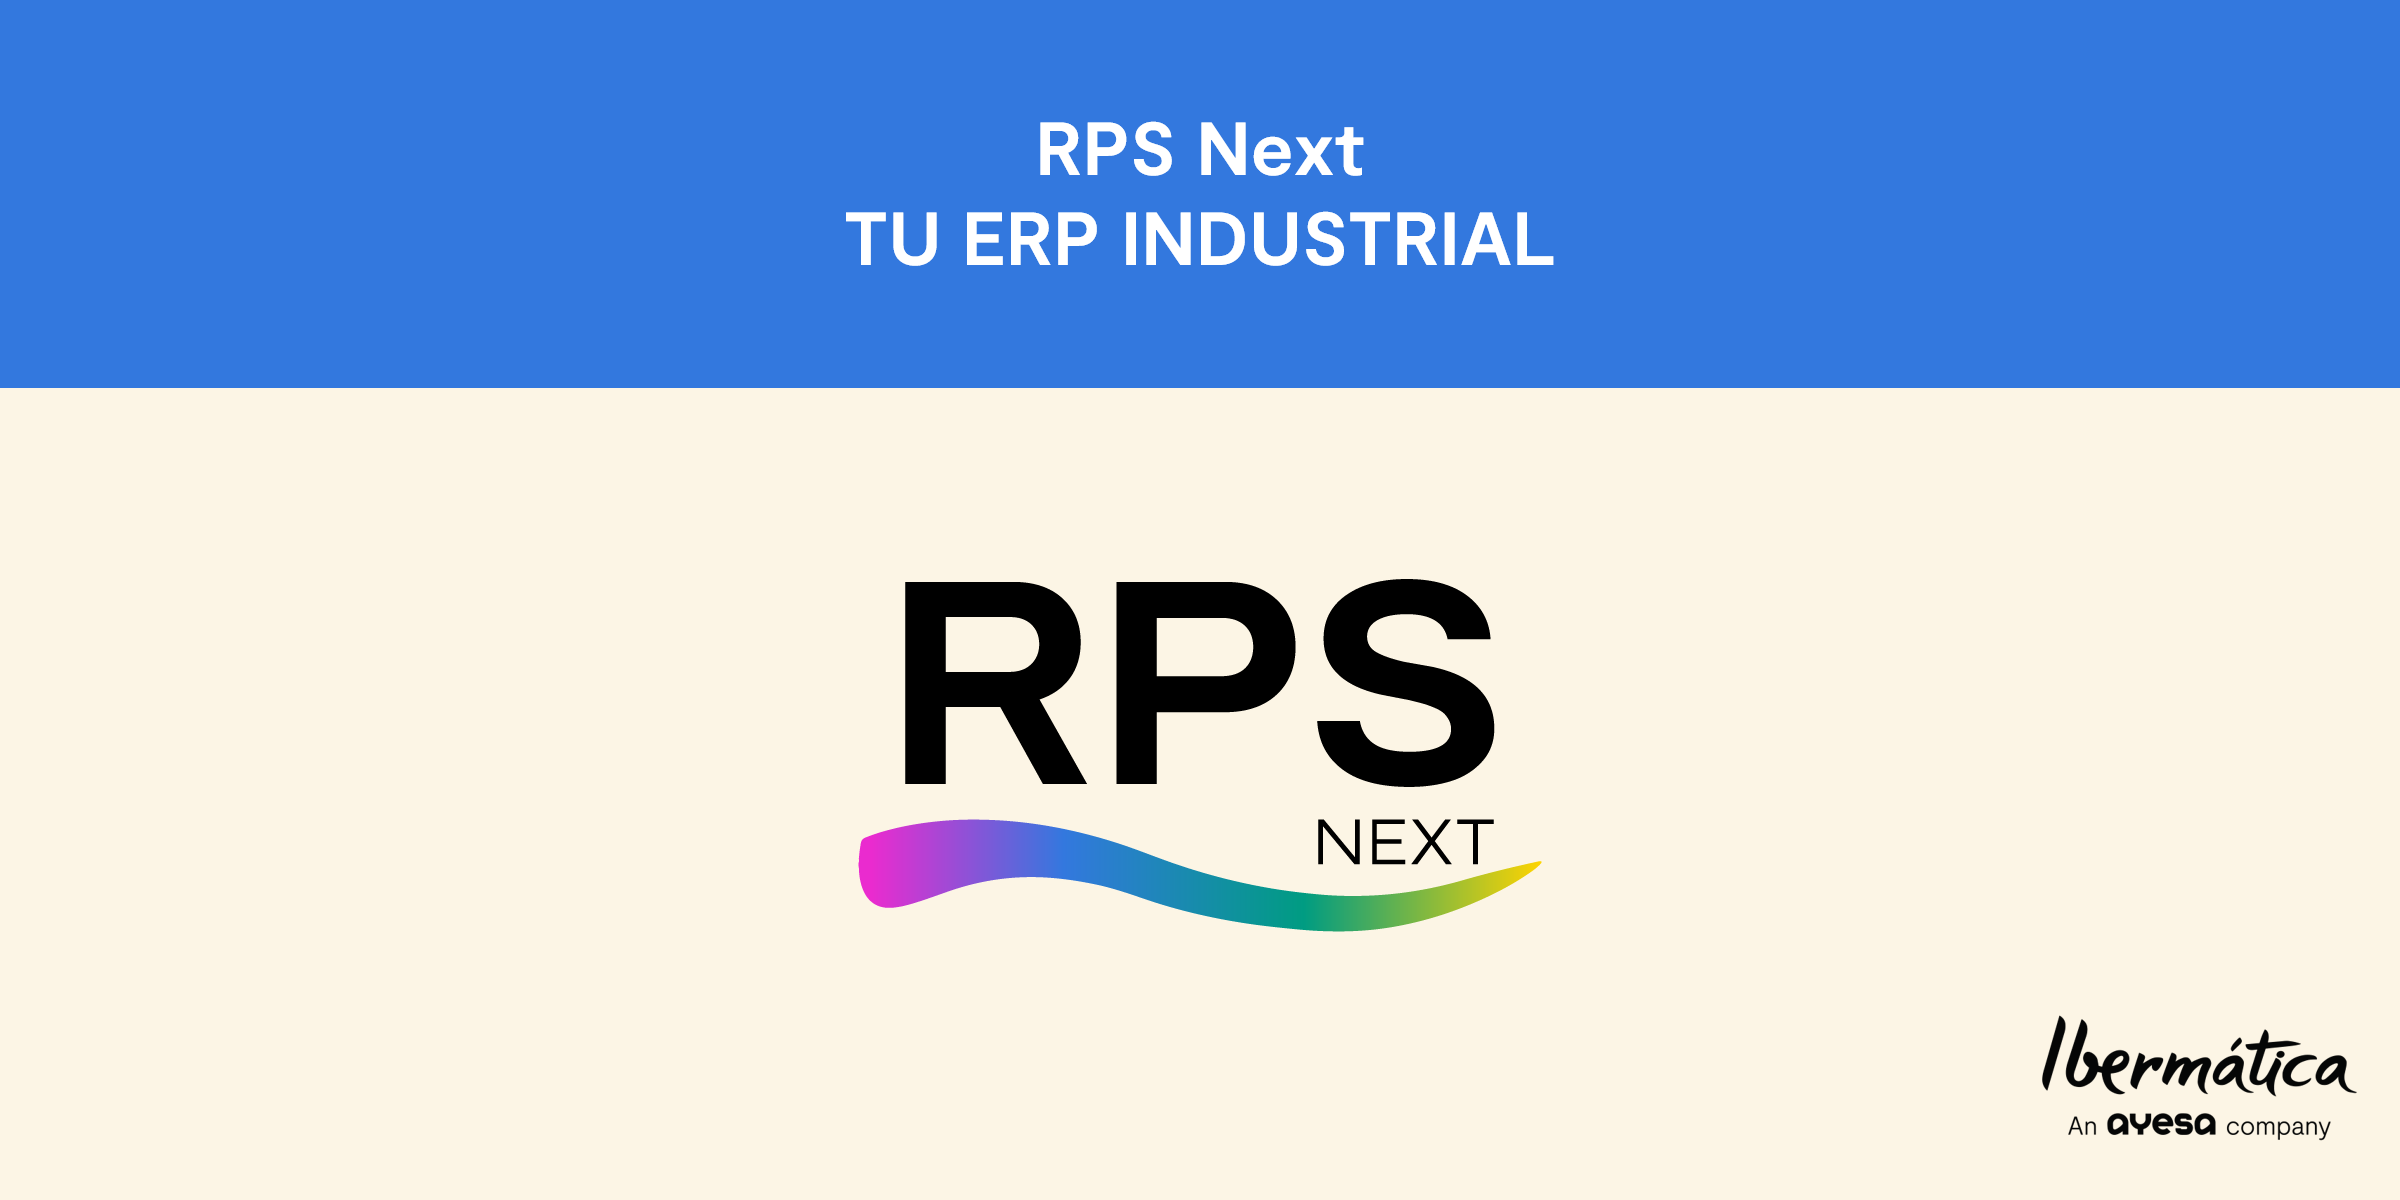 RPS NEXT. Tu ERP Industrial.